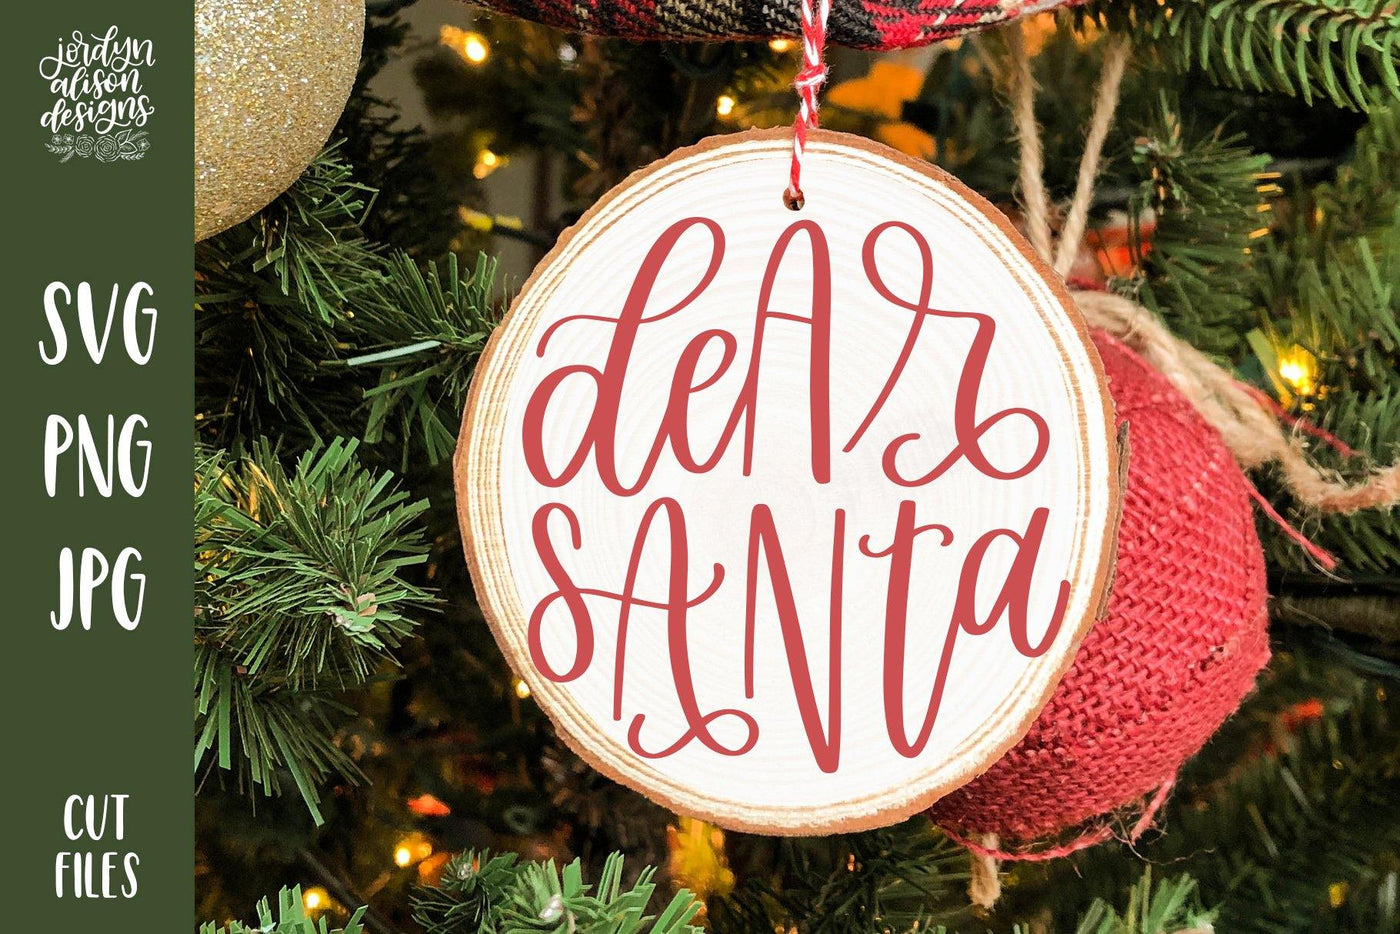 Handwritten text "Dear Santa" on Round Christmas Ornament. 